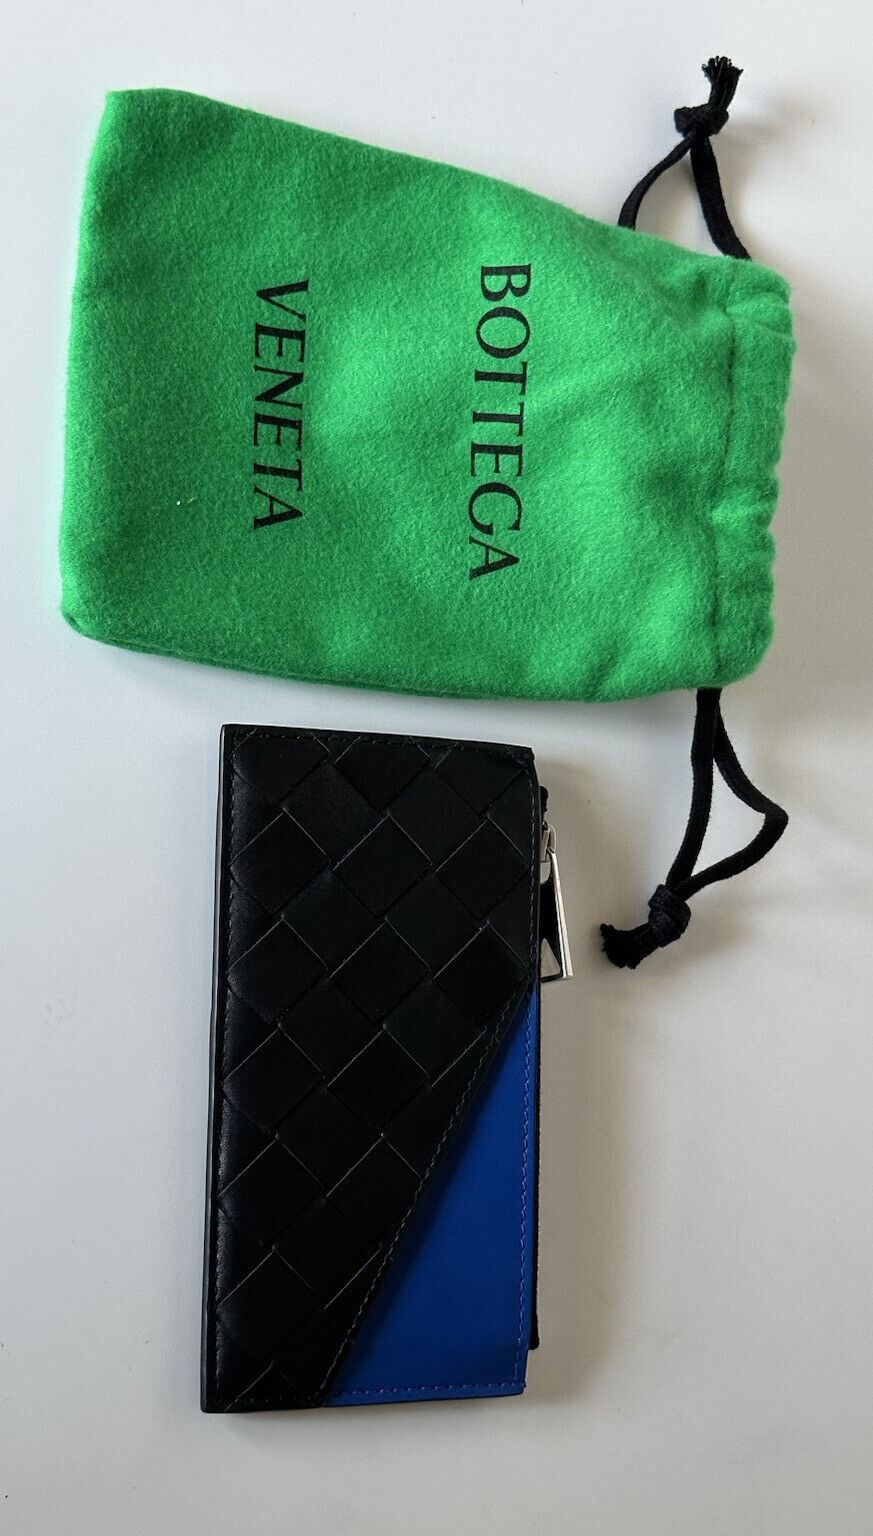 New Bottega Veneta Leather Slim Wallet Intreccio Weave Black/Blue Made in Italy